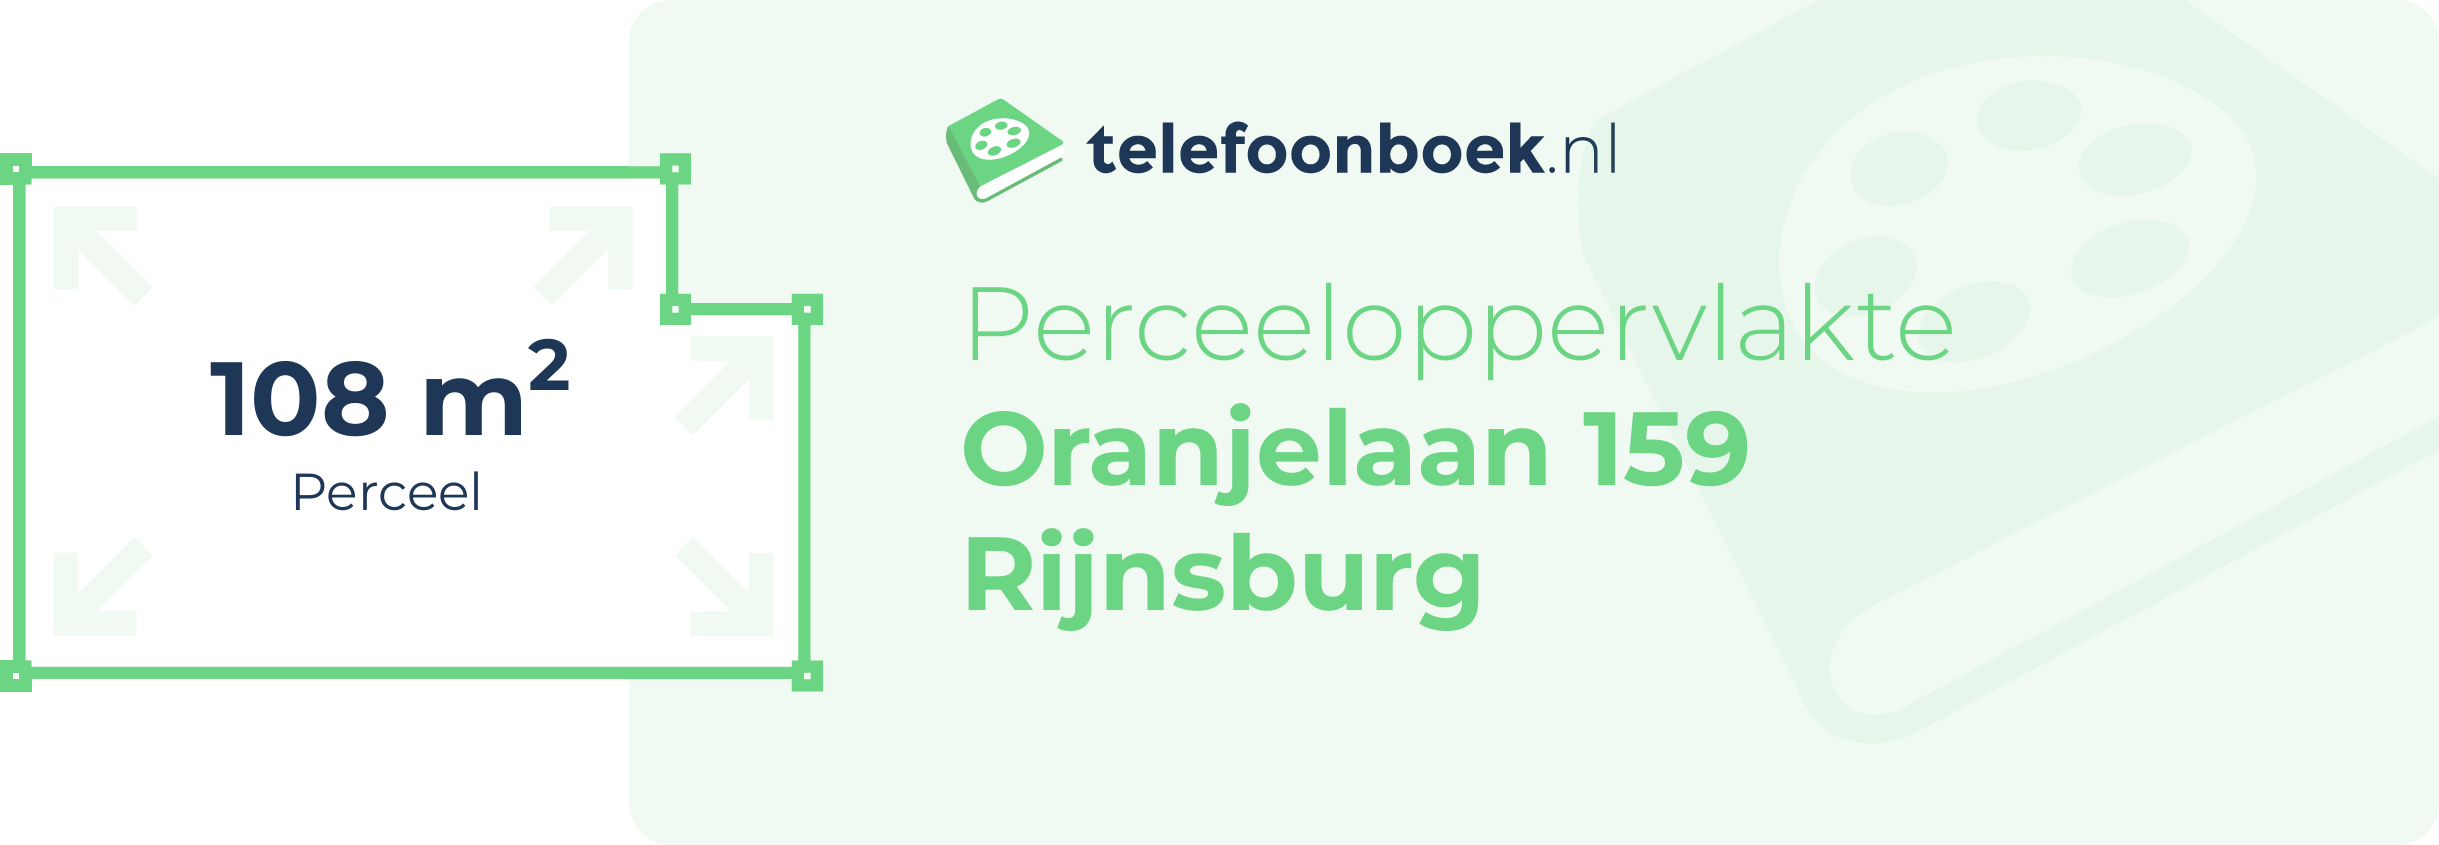 Perceeloppervlakte Oranjelaan 159 Rijnsburg